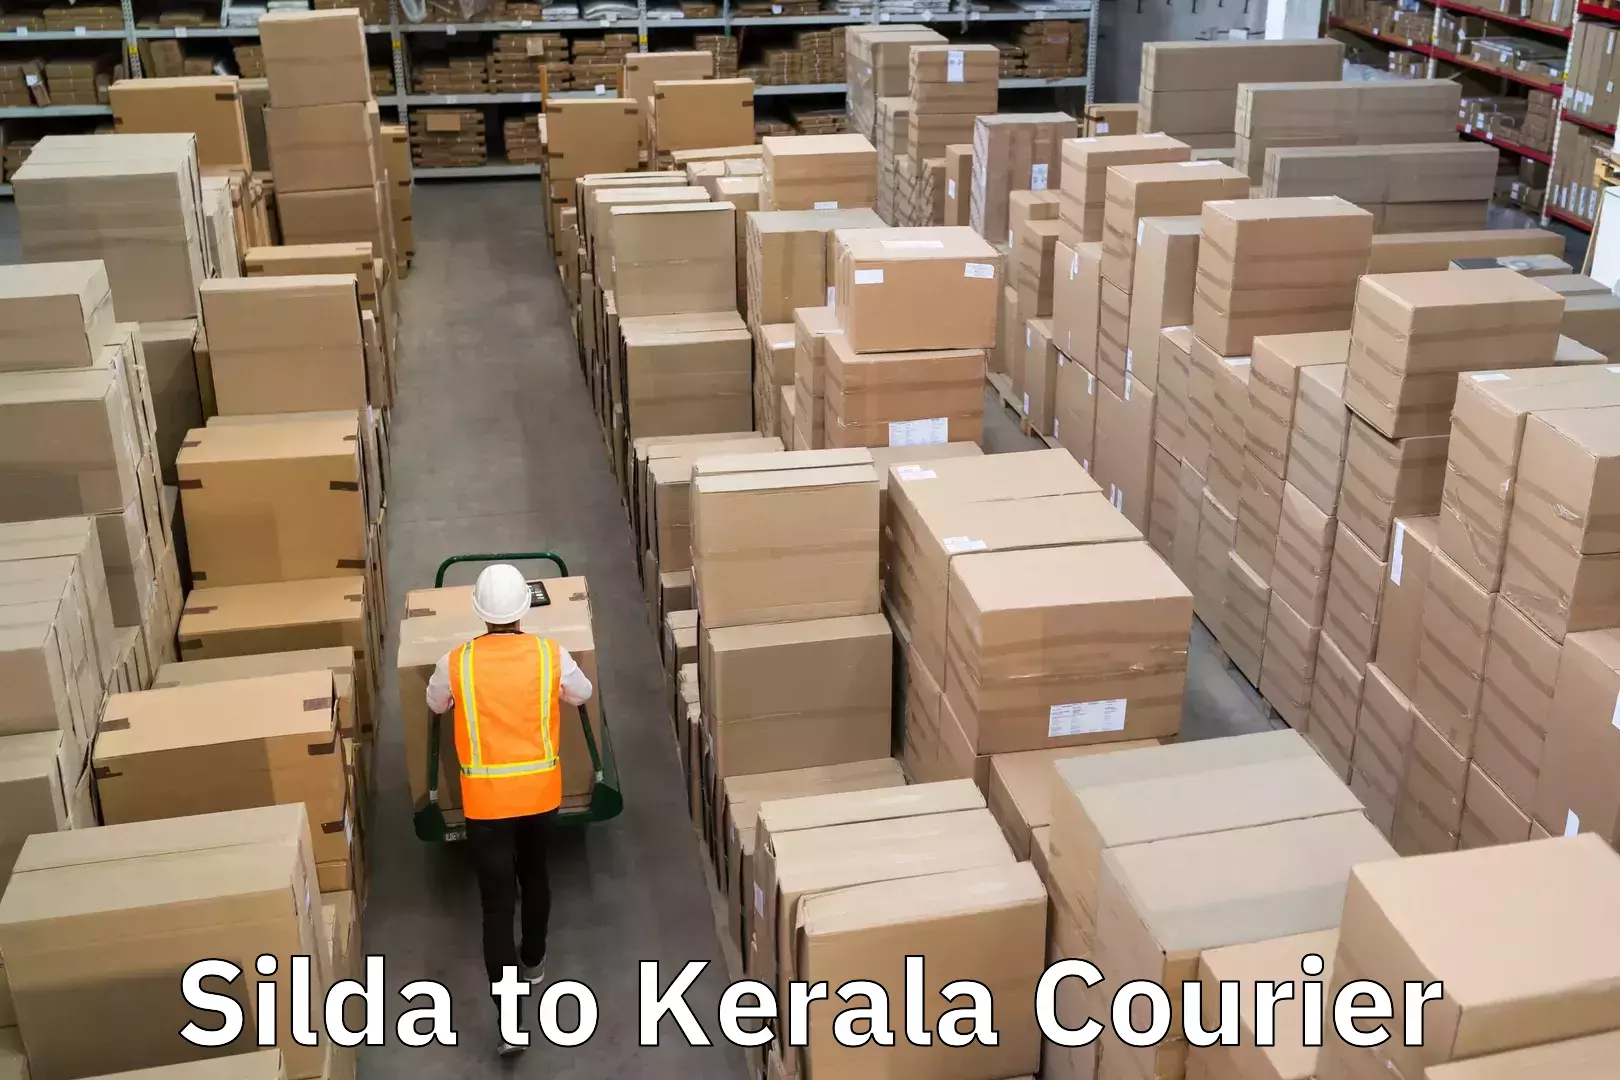 Supply chain efficiency Silda to Kerala